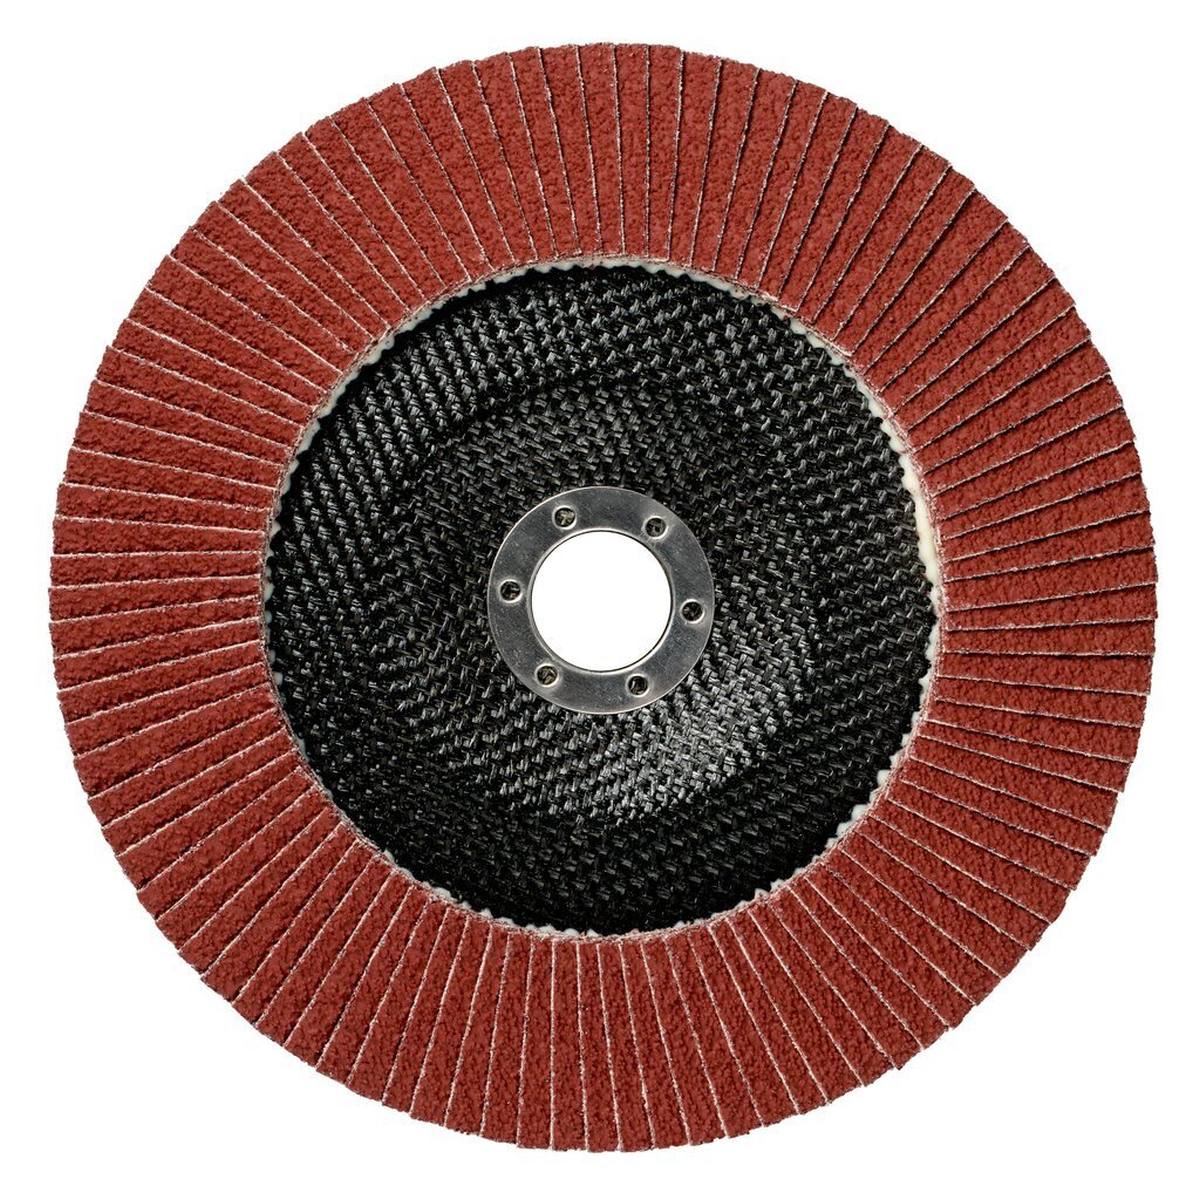 3M Cubitron II disco de láminas 967A, 180 mm, 22.23 mm, P40 #65060 cónico